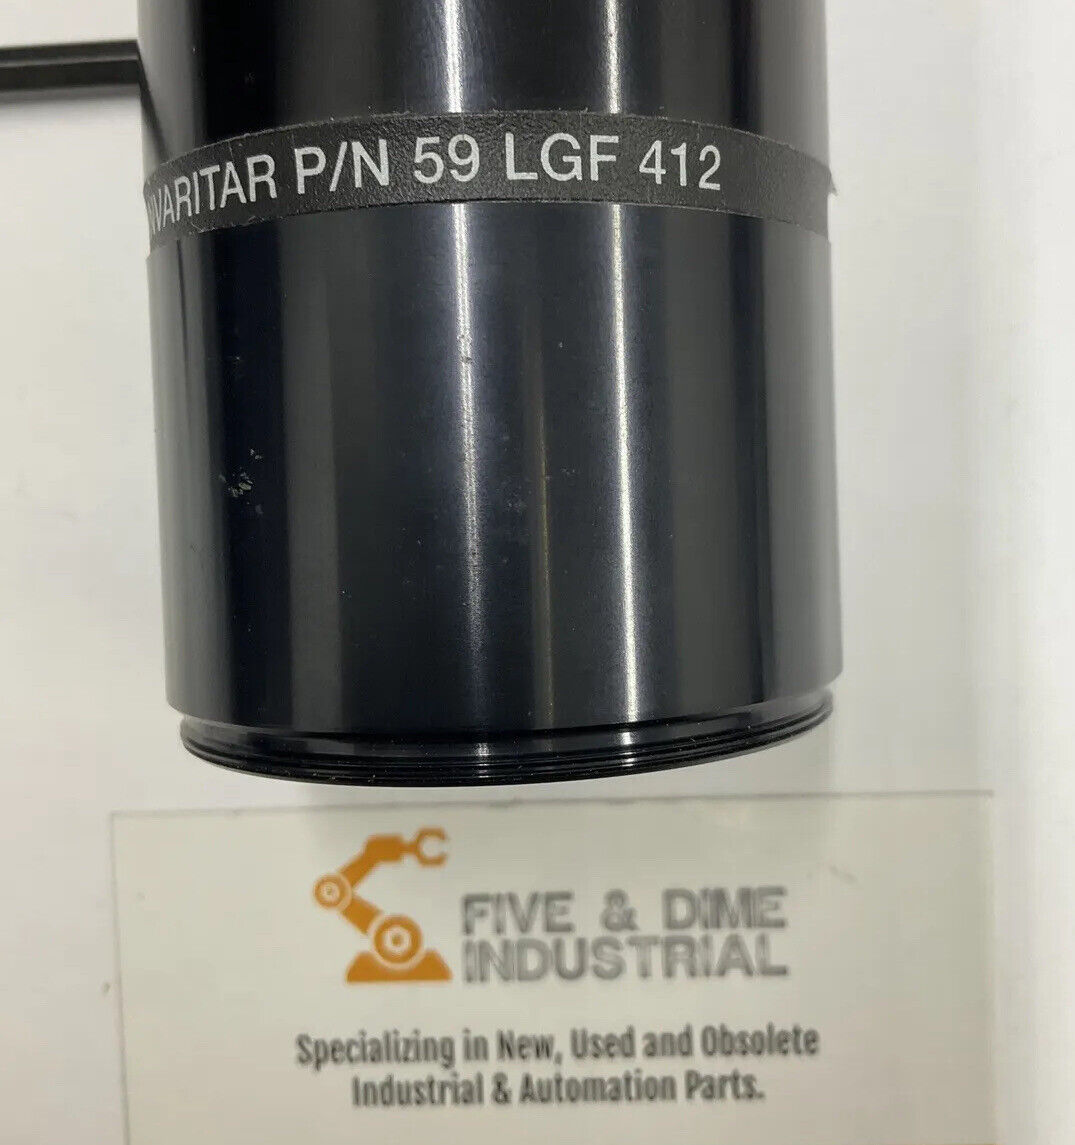 Melles Griot Invaritar P/N 59 LGF 412 Sensor (GR171)